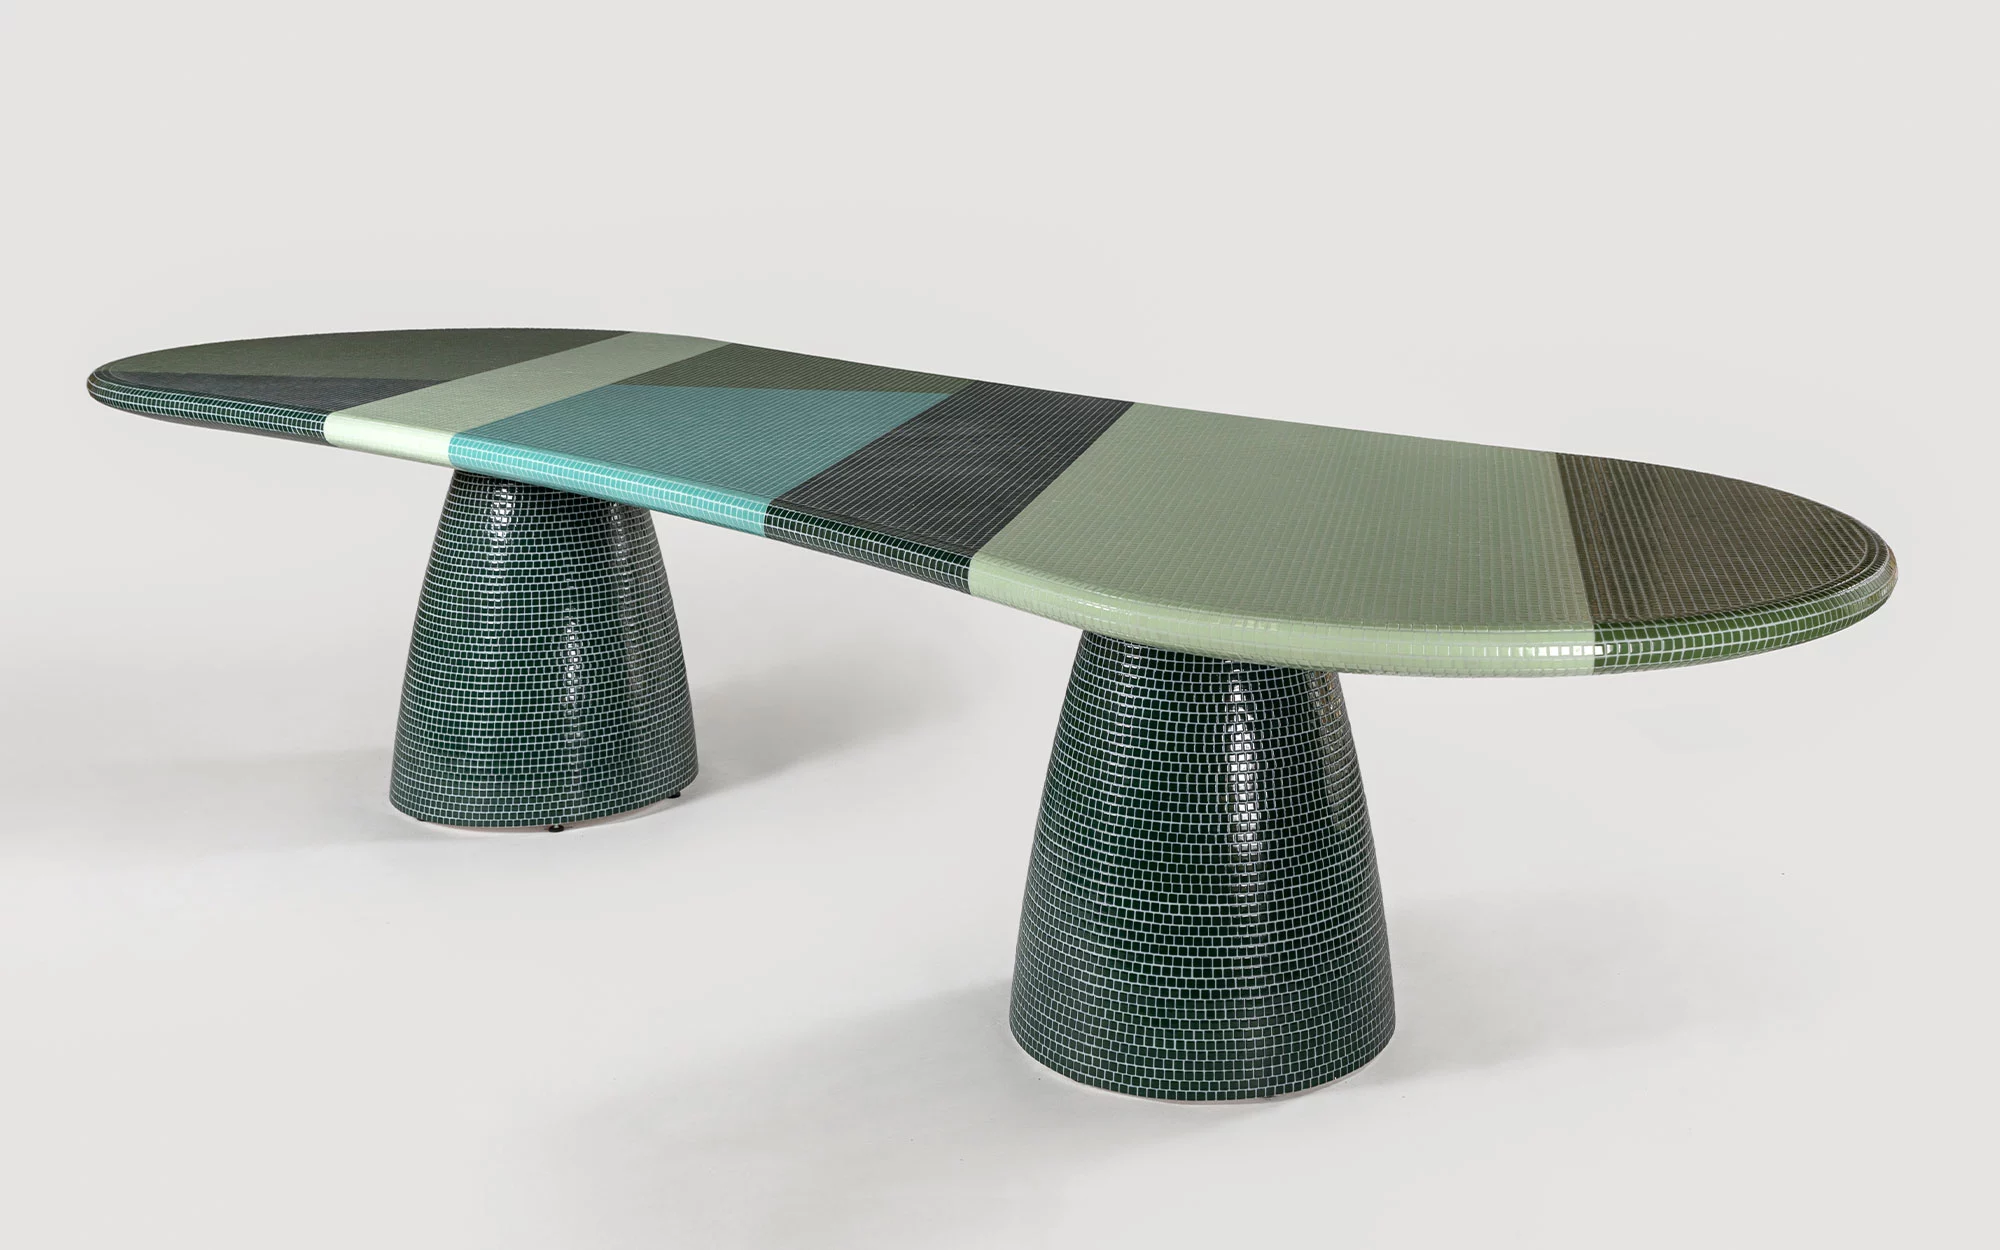 Umbria Dining Table - Alessandro Mendini - Armchair - Galerie kreo